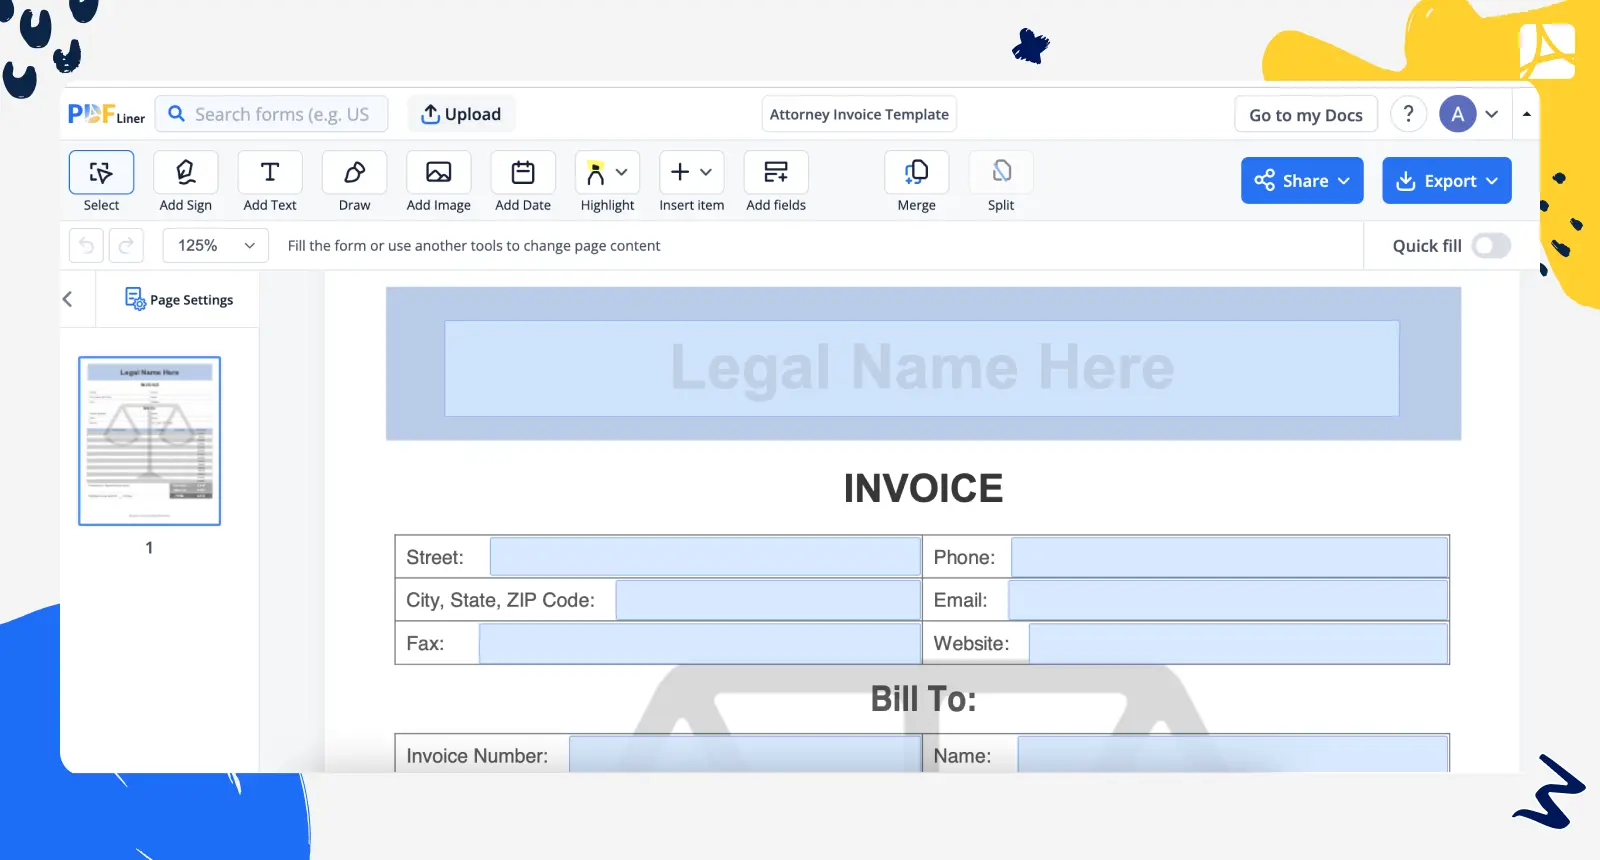 Attorney Invoice Template screenshot